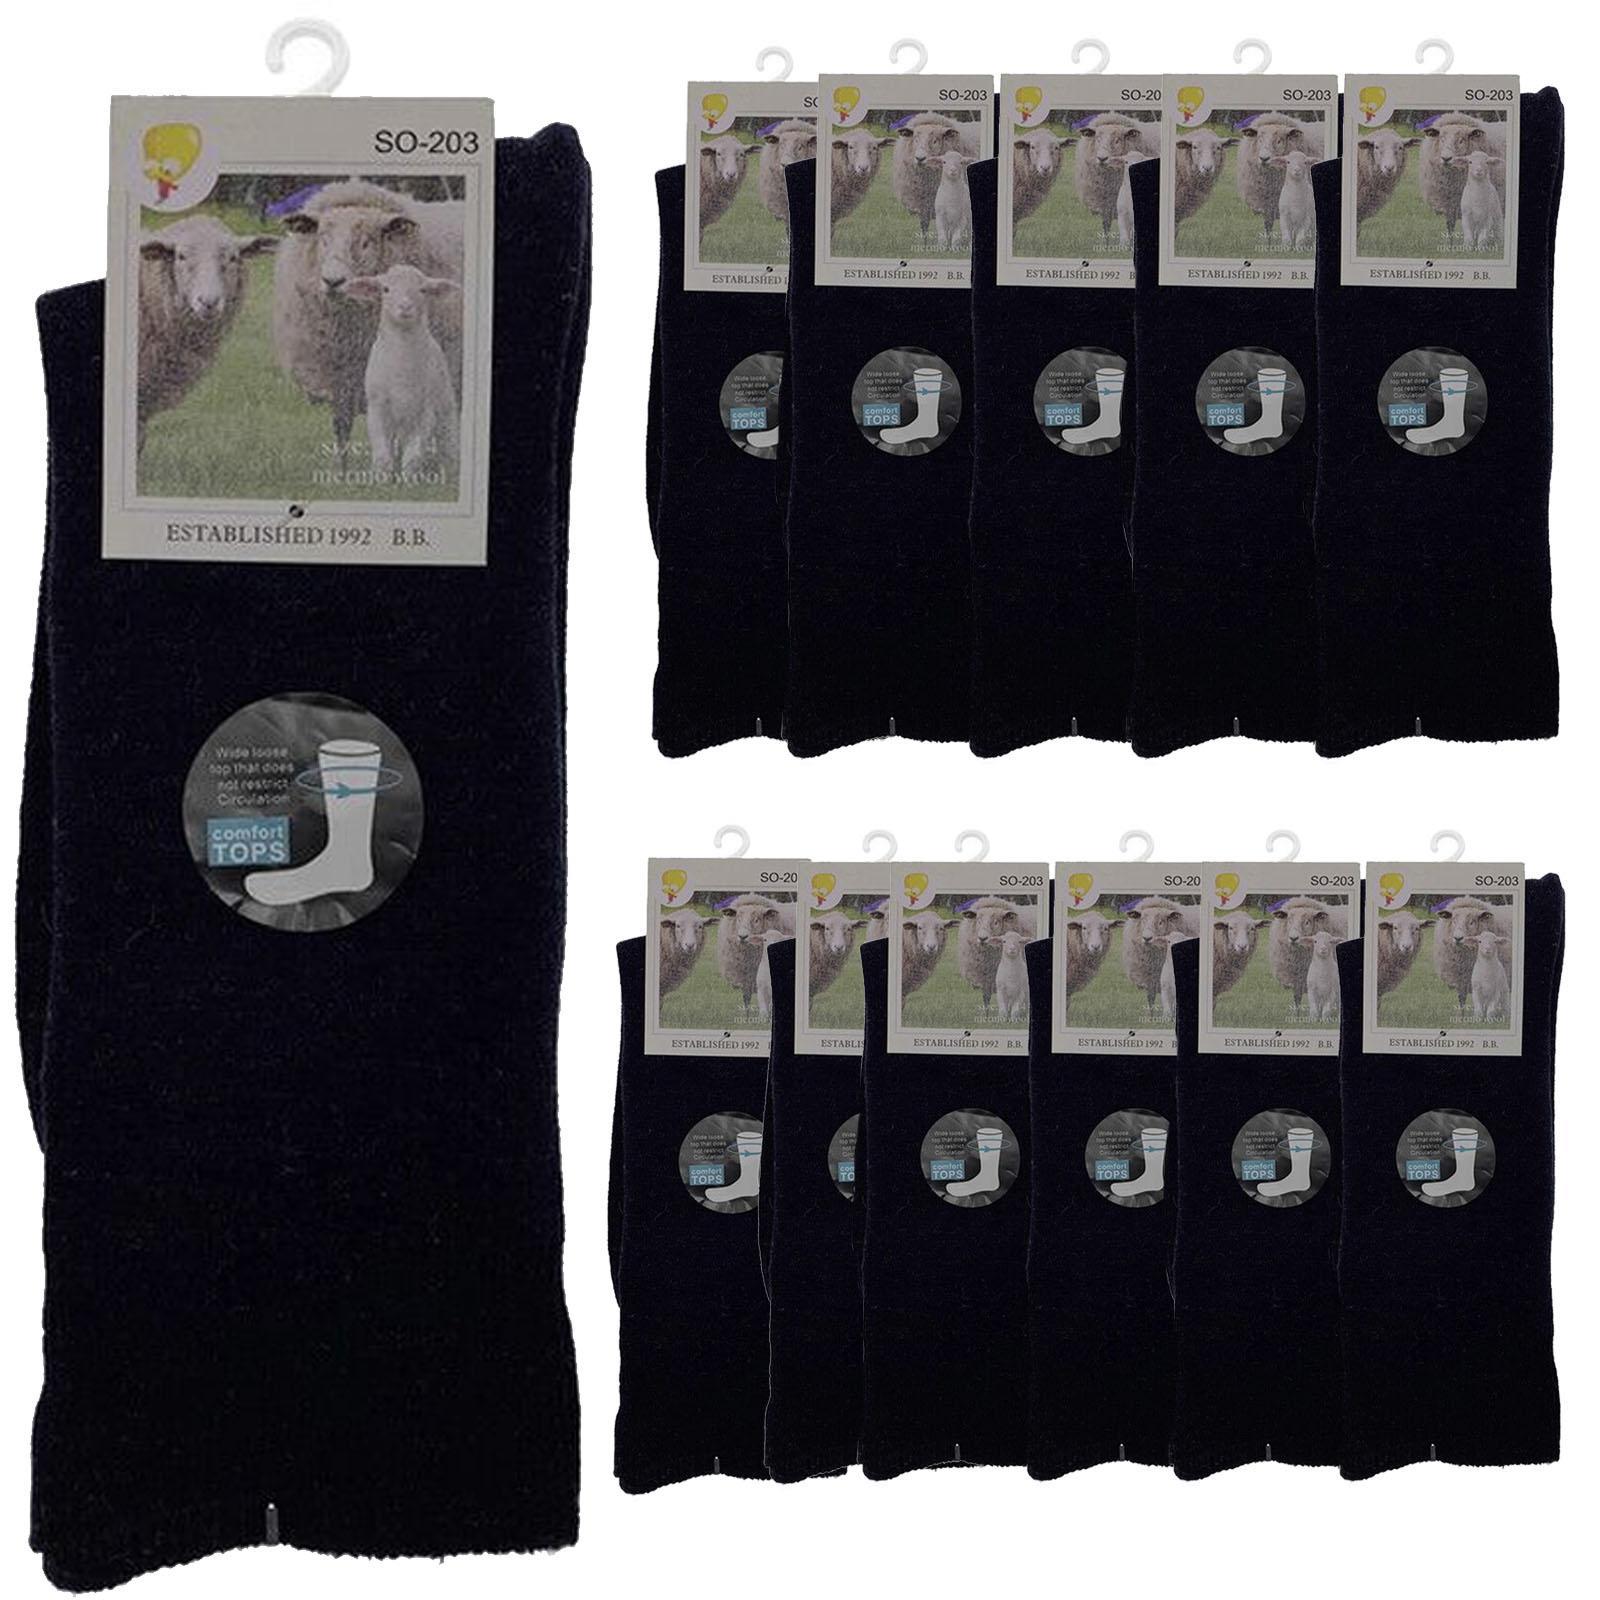 Merino Wool Mens Loose Top Thermal Socks Diabetic Comfort Circulation - 12 Pairs - Navy - 2-8